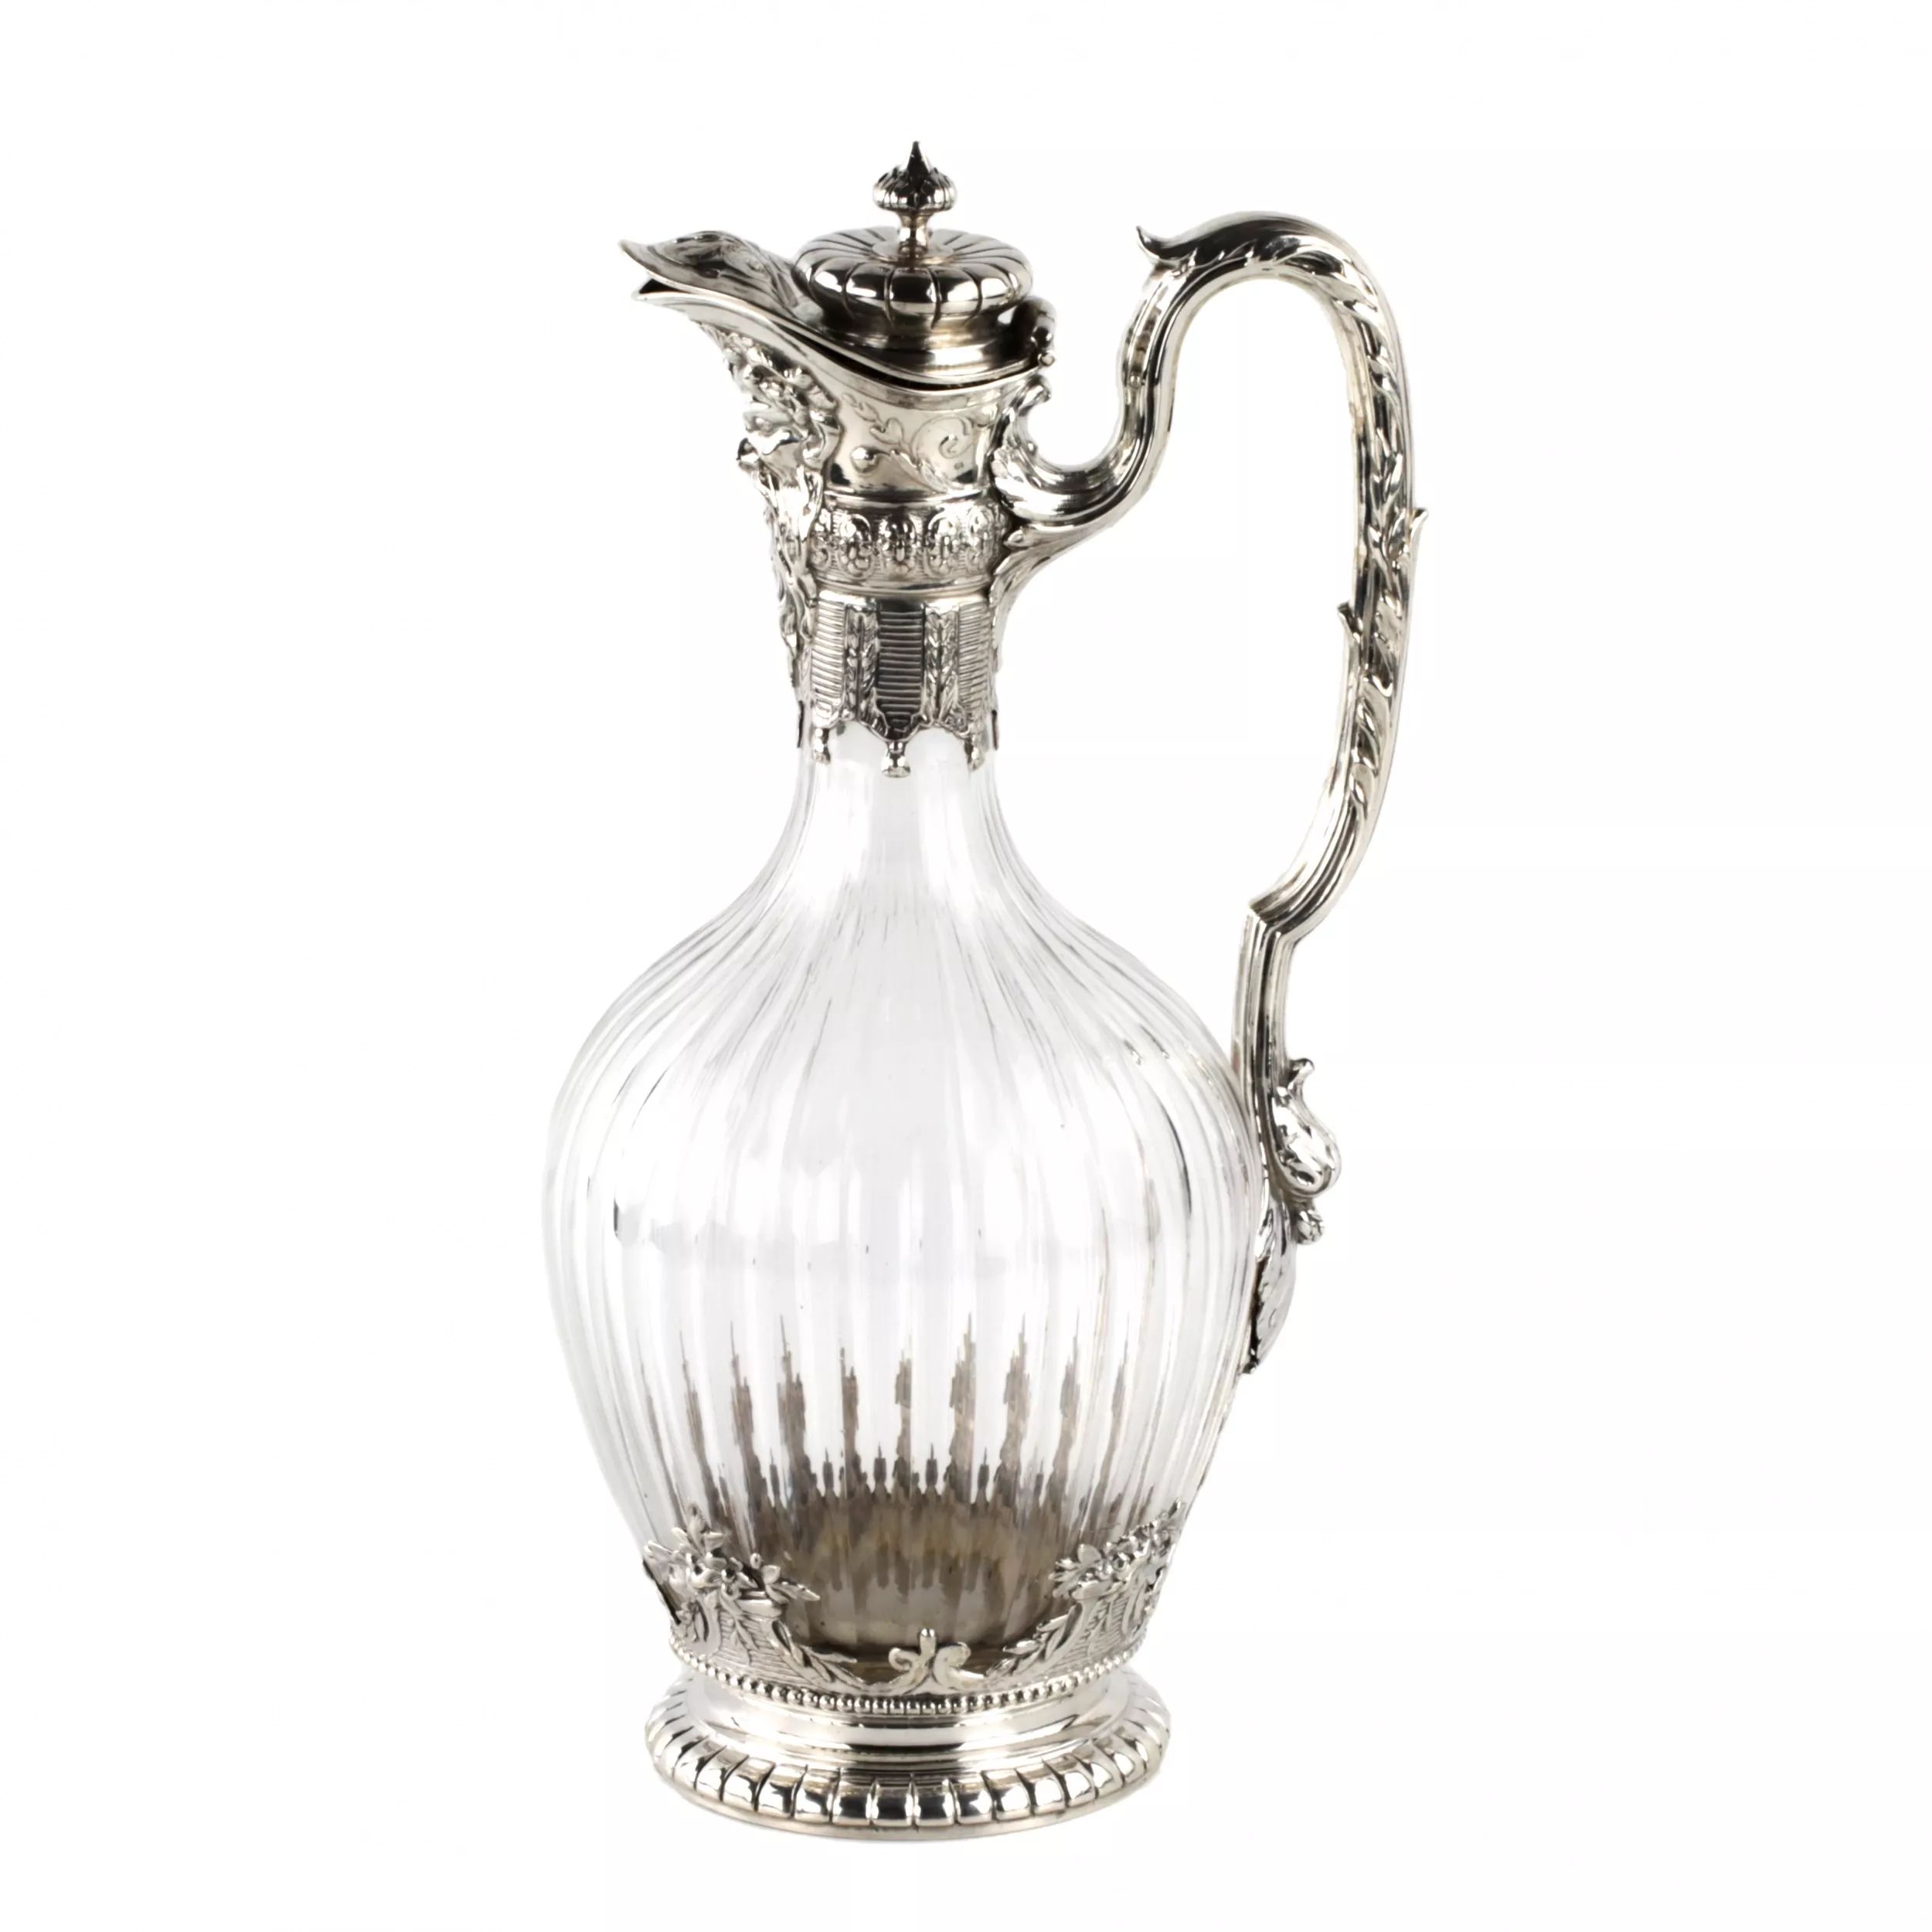 Silver-wine-jug-in-16th-century-austere-male-dress-